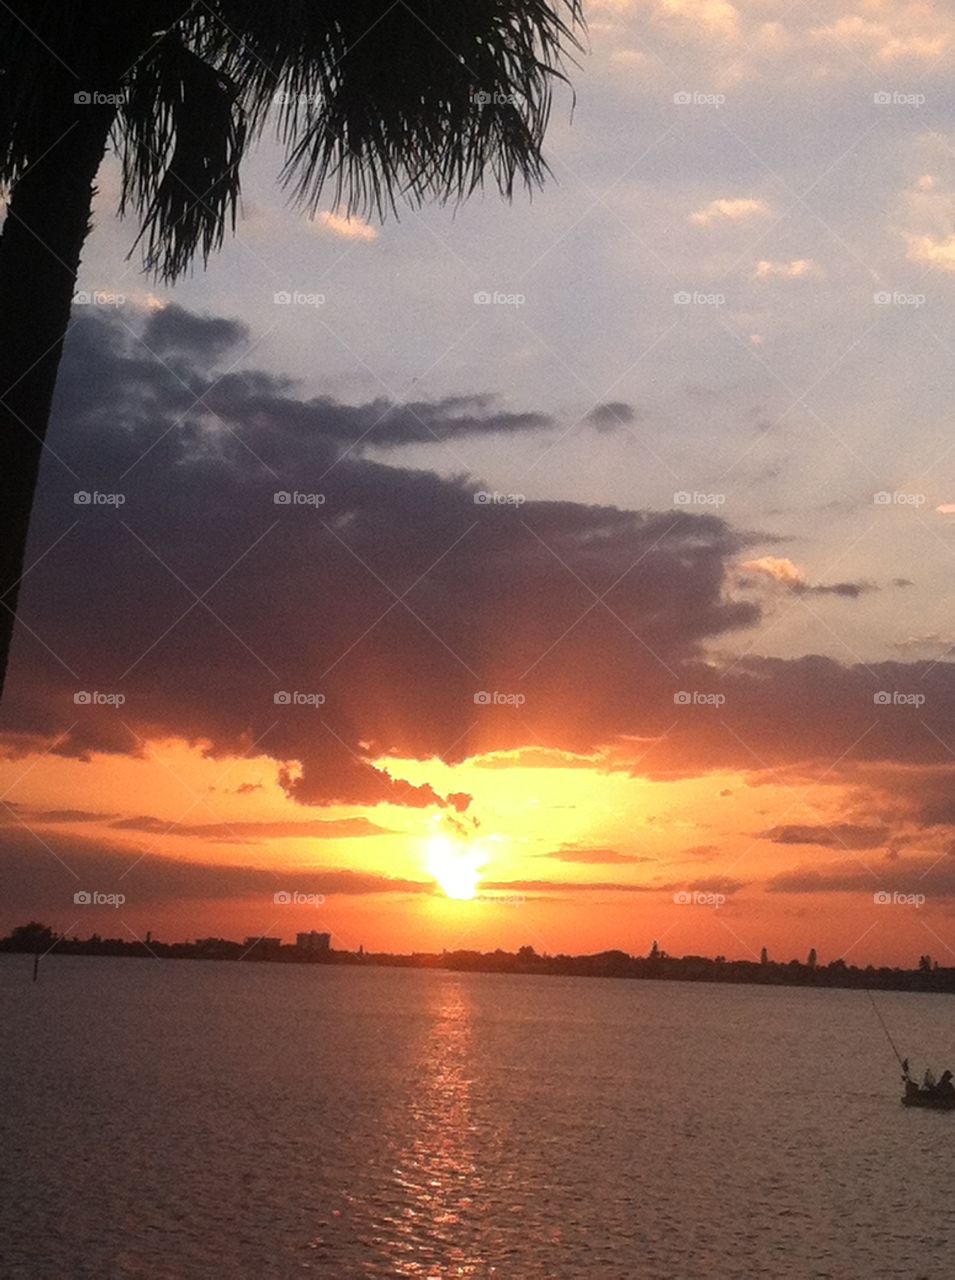 Sun setting in Sarasota. Sunset over north bridge Sarasota Fl